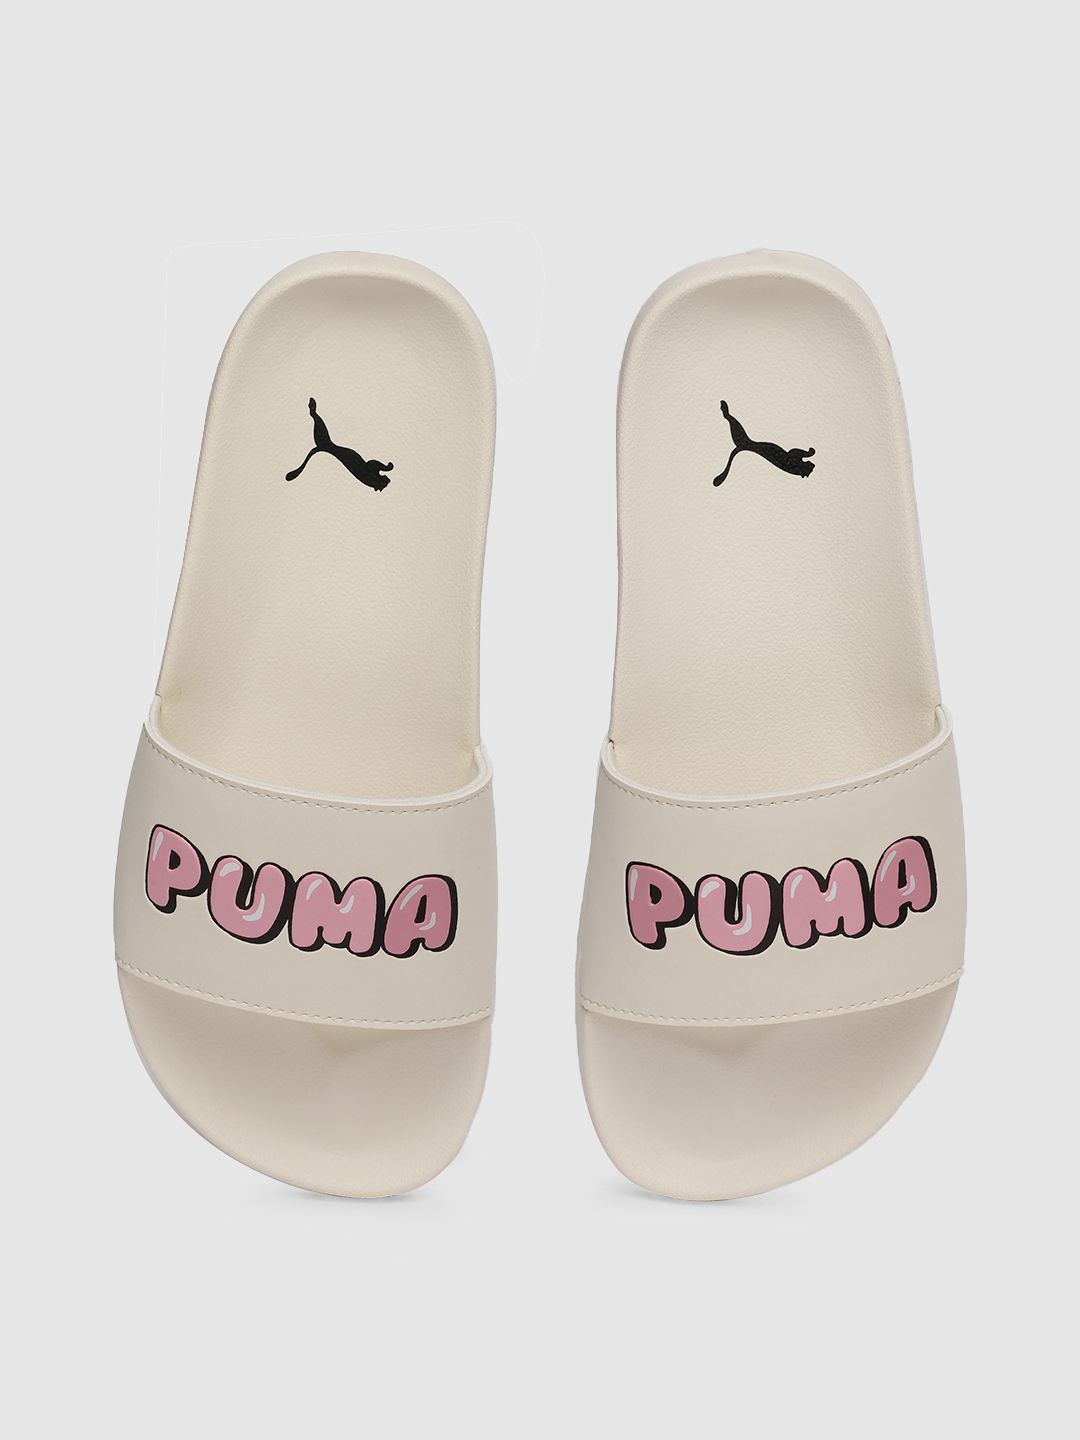 Puma Unisex White & Pink Printed Sliders Price in India